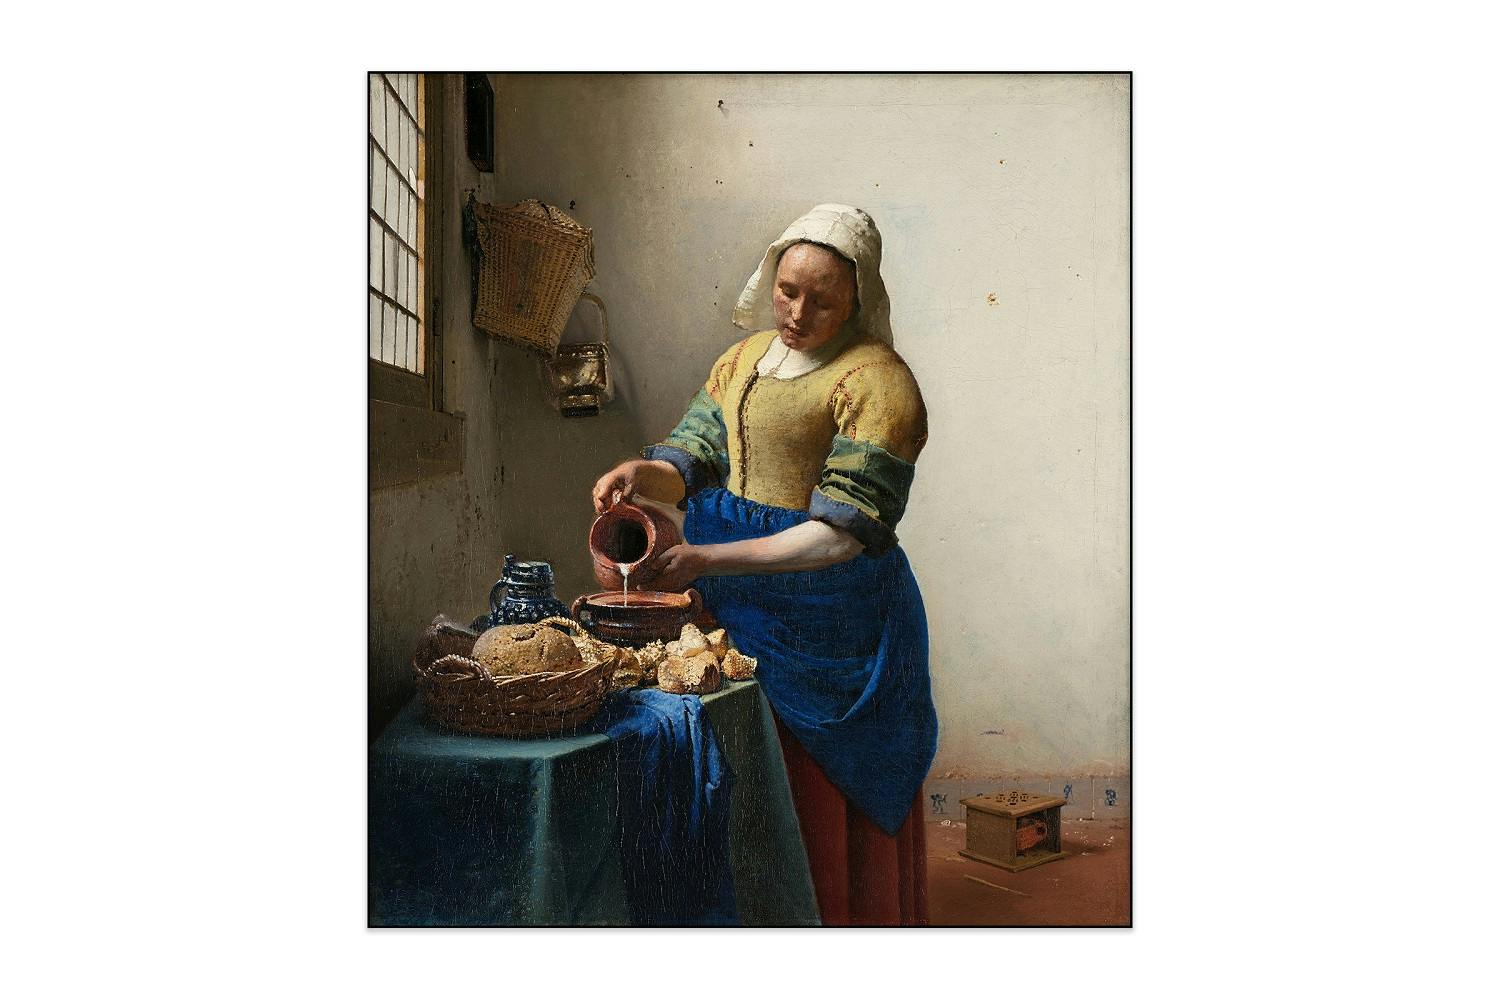 Fotopaneel - Johannes Vermeer - Het melkmeisje